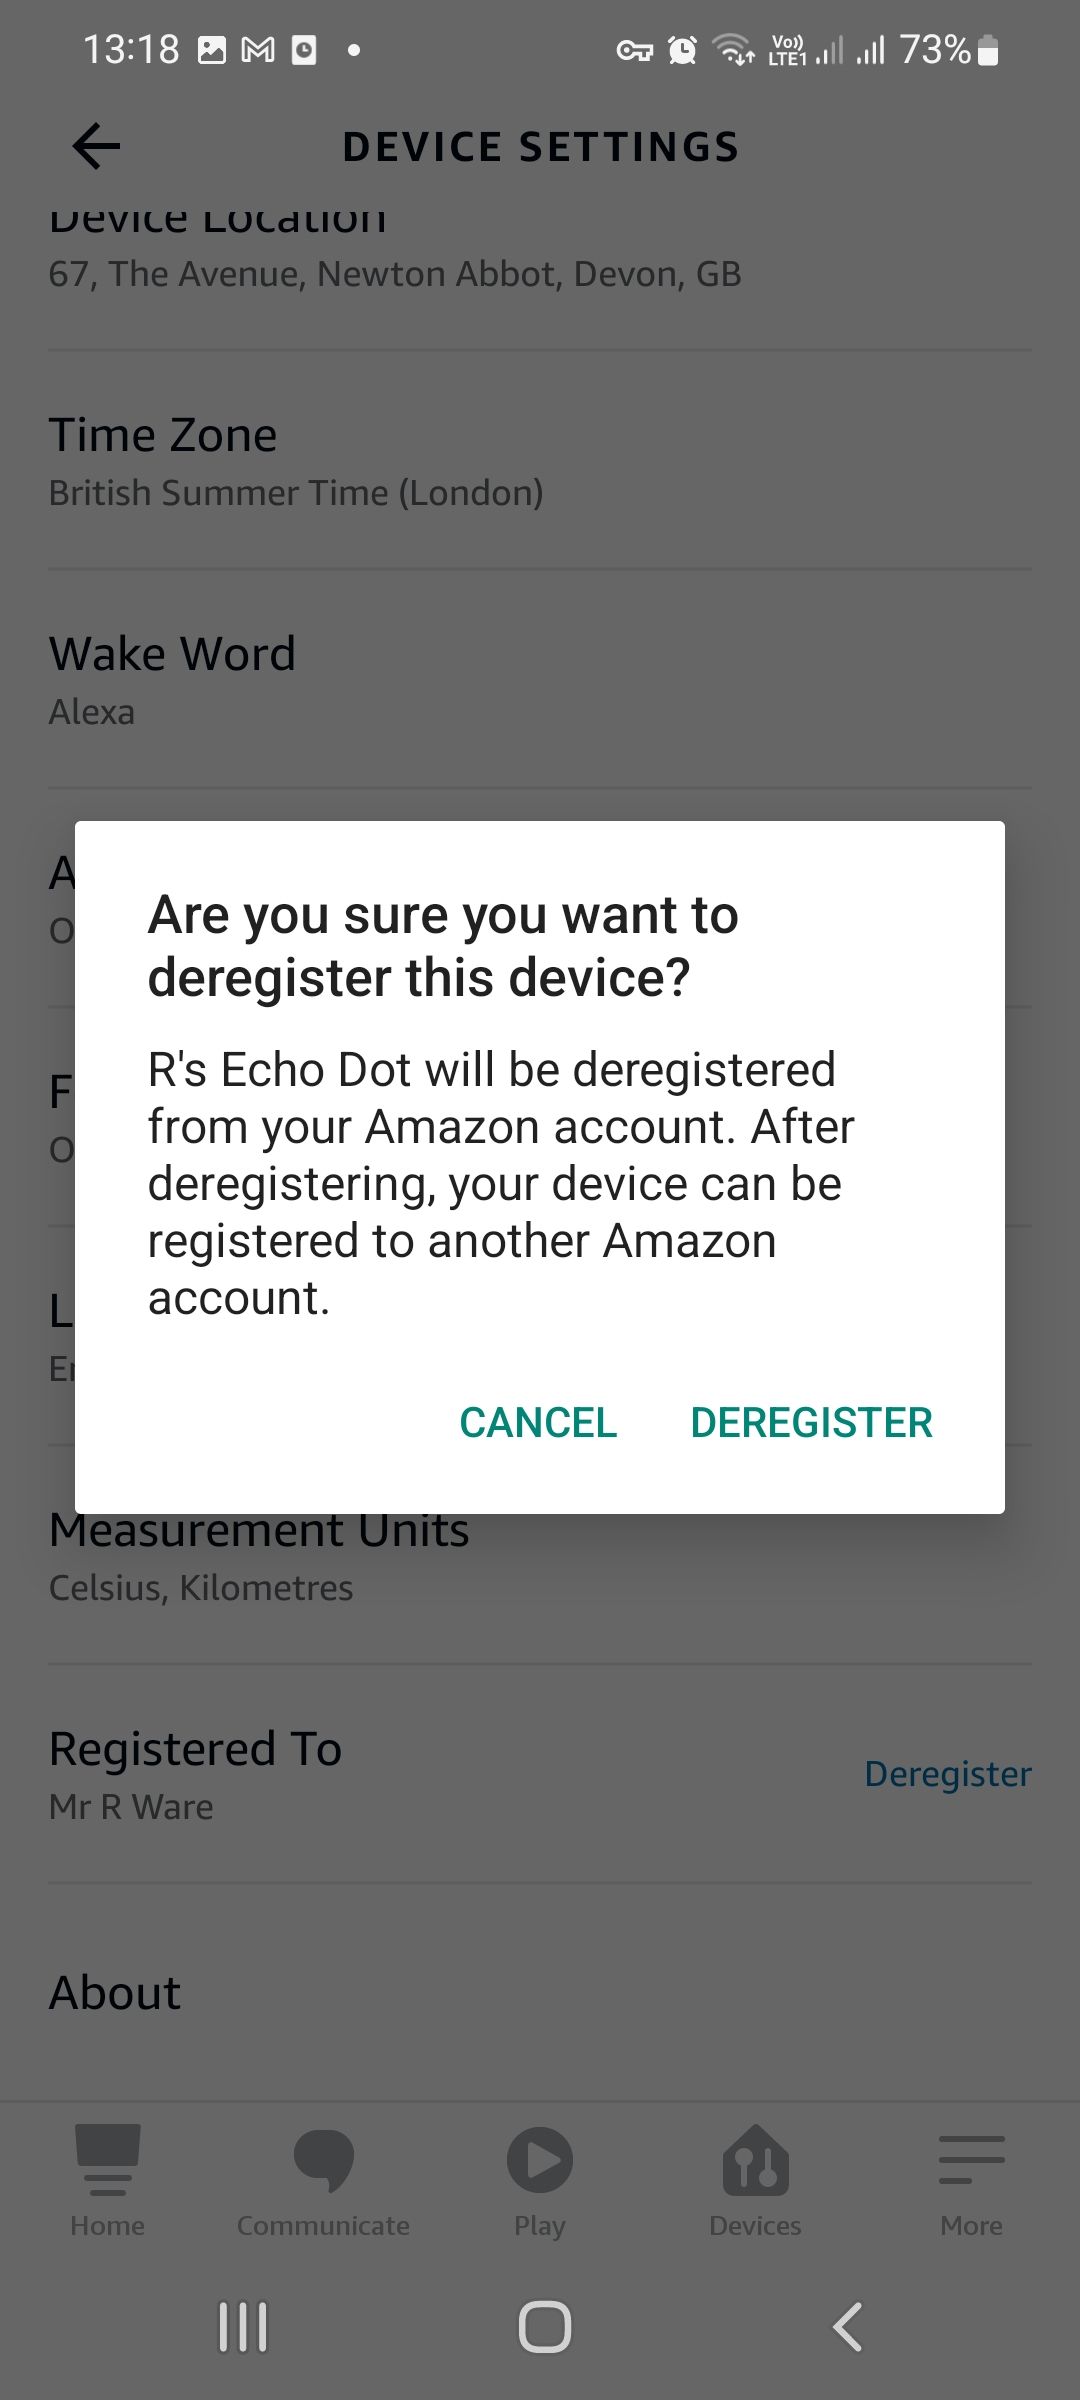 The deregister option in the Alexa app